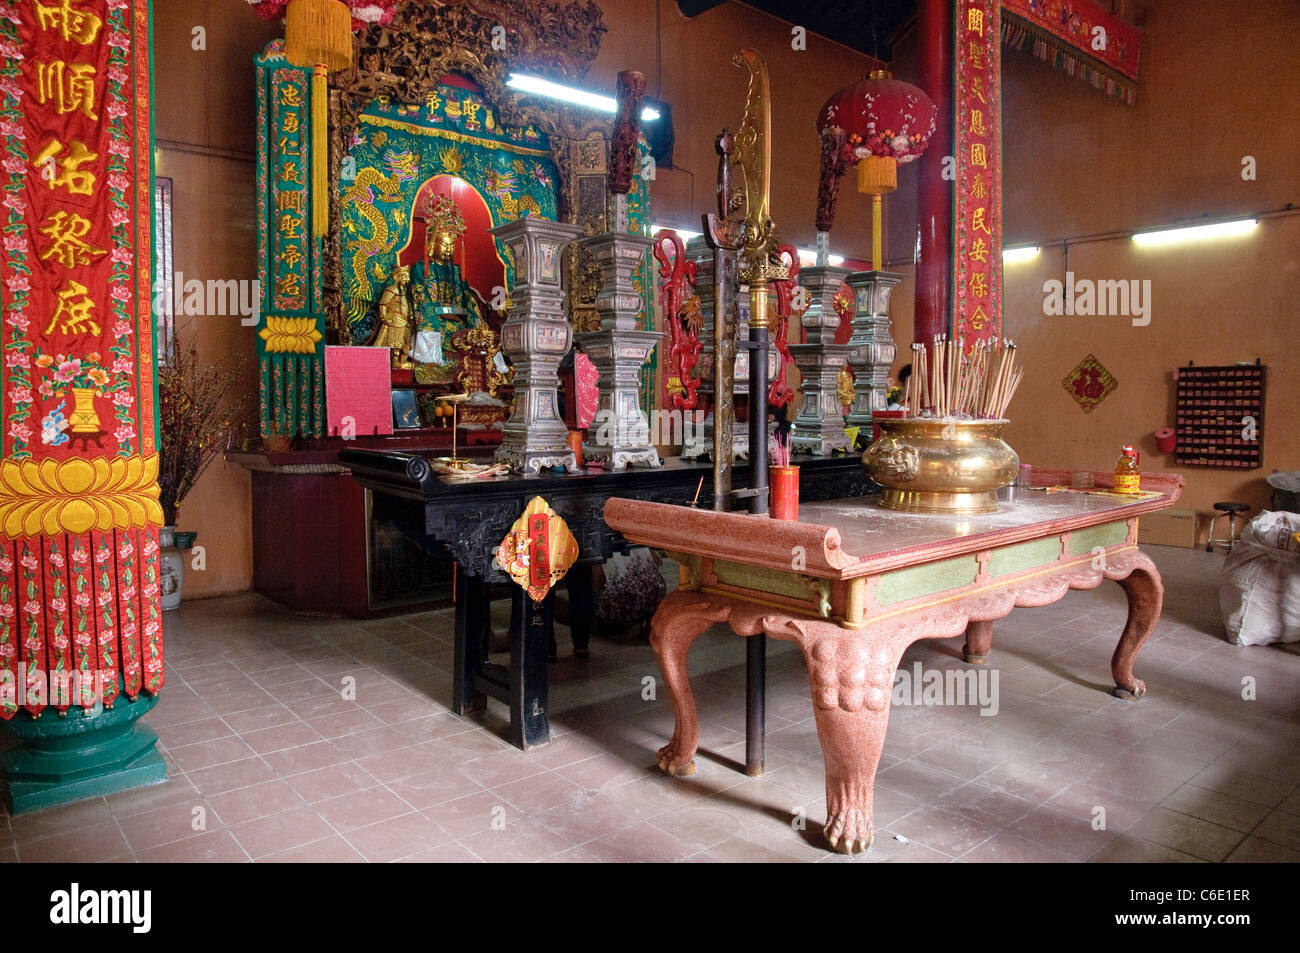 Altar in a Chinese temple, Kuala Lumpur, Malaysia, Southeast Asia, Asia Stock Photo